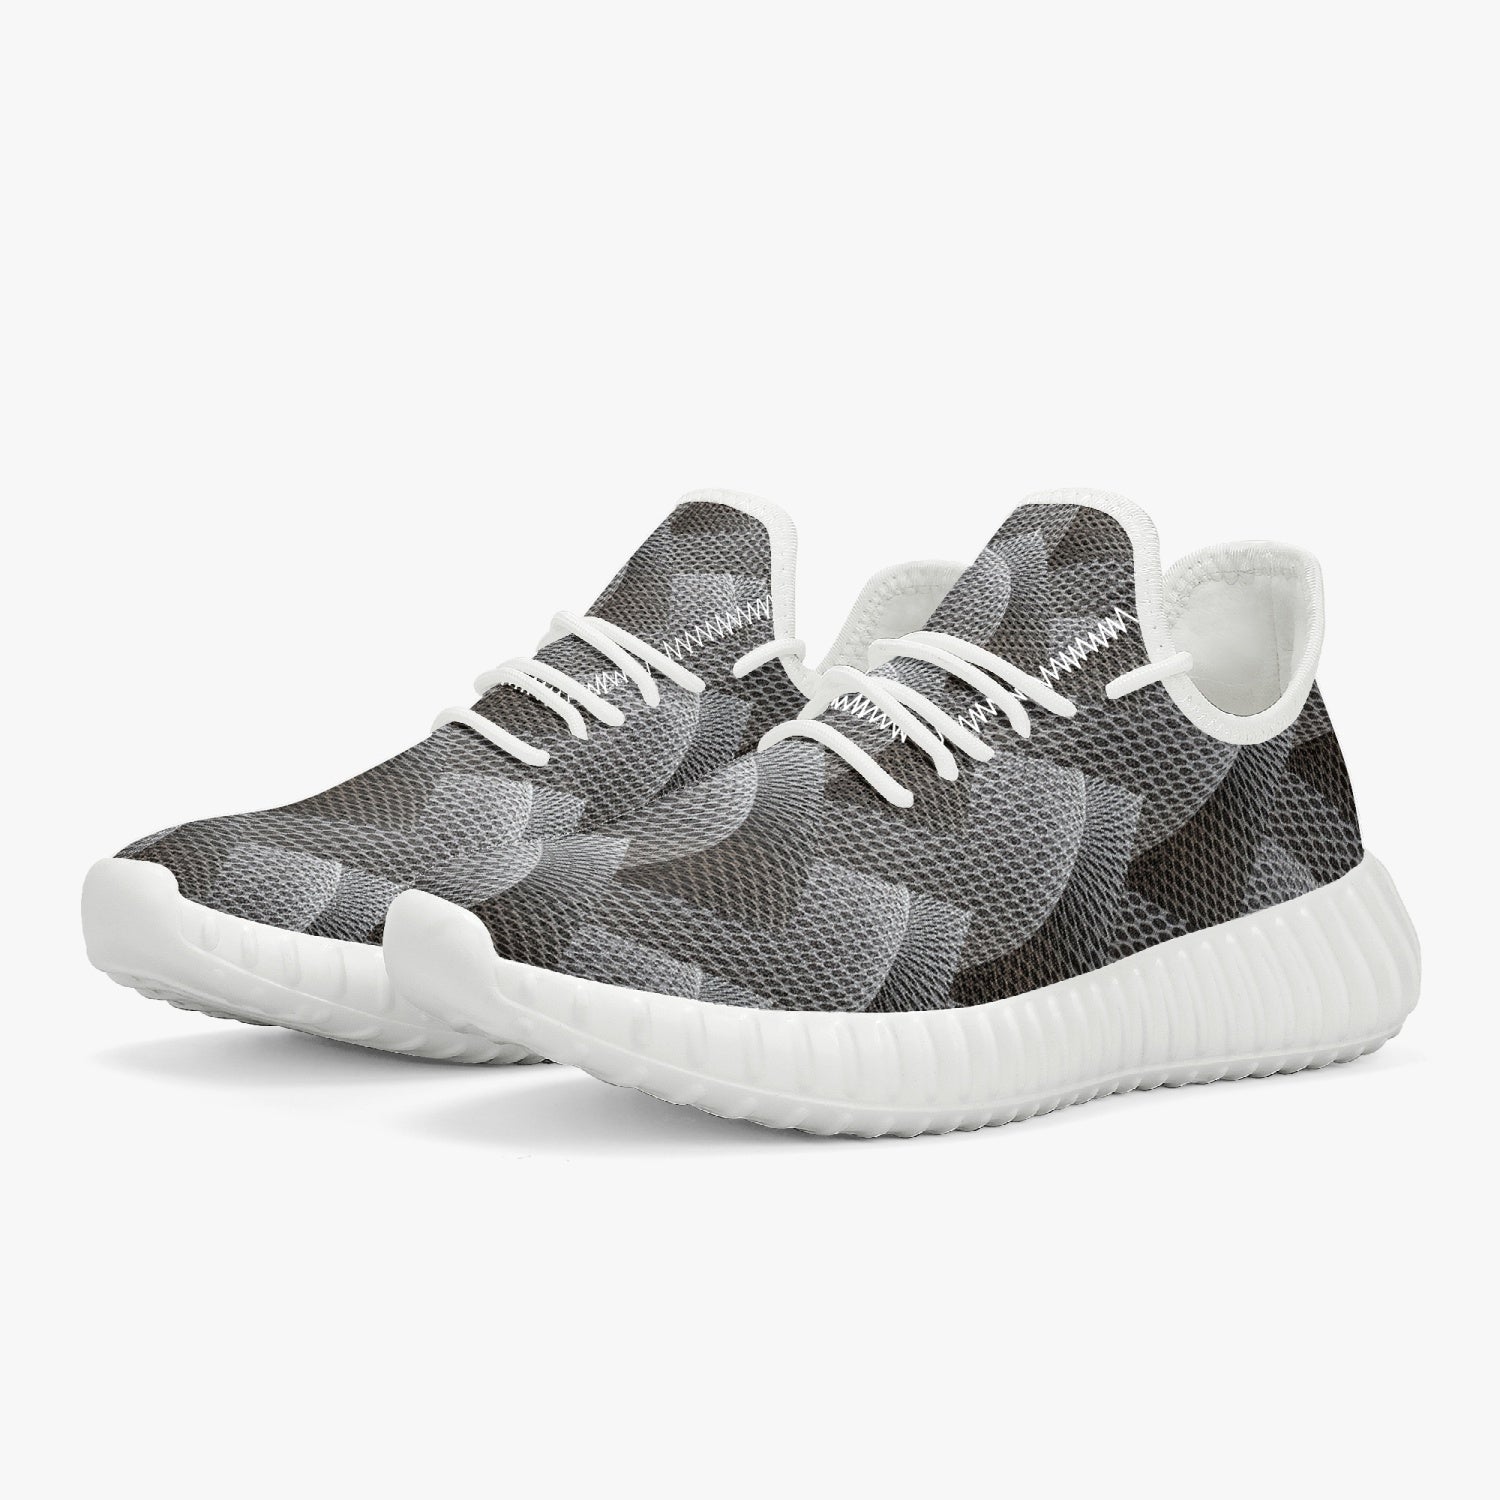 HoneyComb 3D. Mesh Knit Sneakers - White/Black